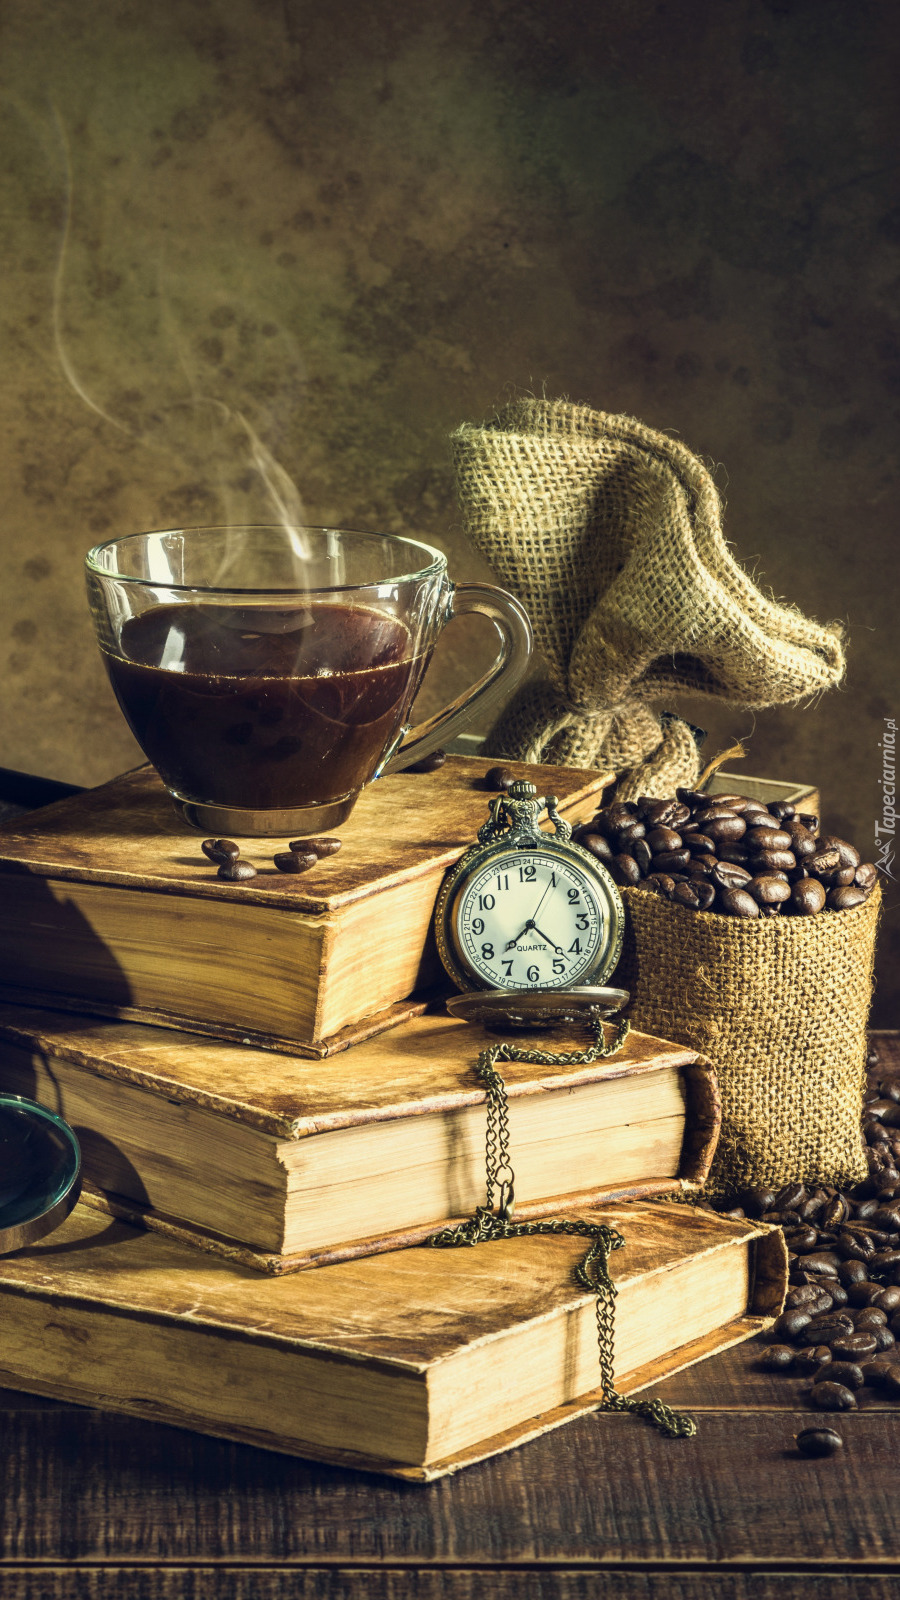 Zegarek i kawa na książkach